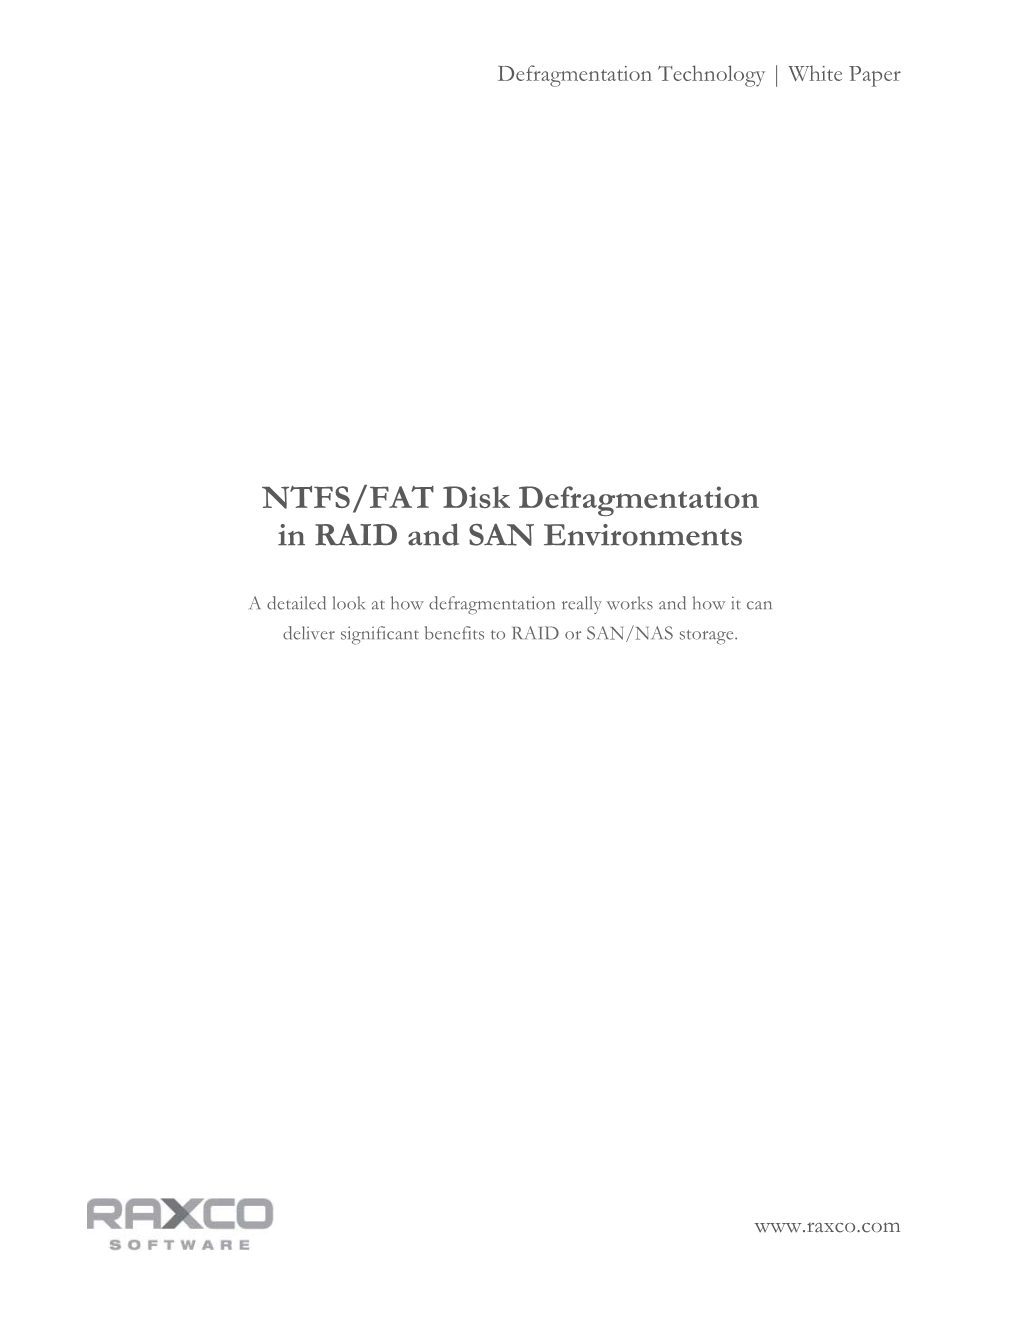 NTFS/FAT Disk Defragmentation in RAID and SAN Environments